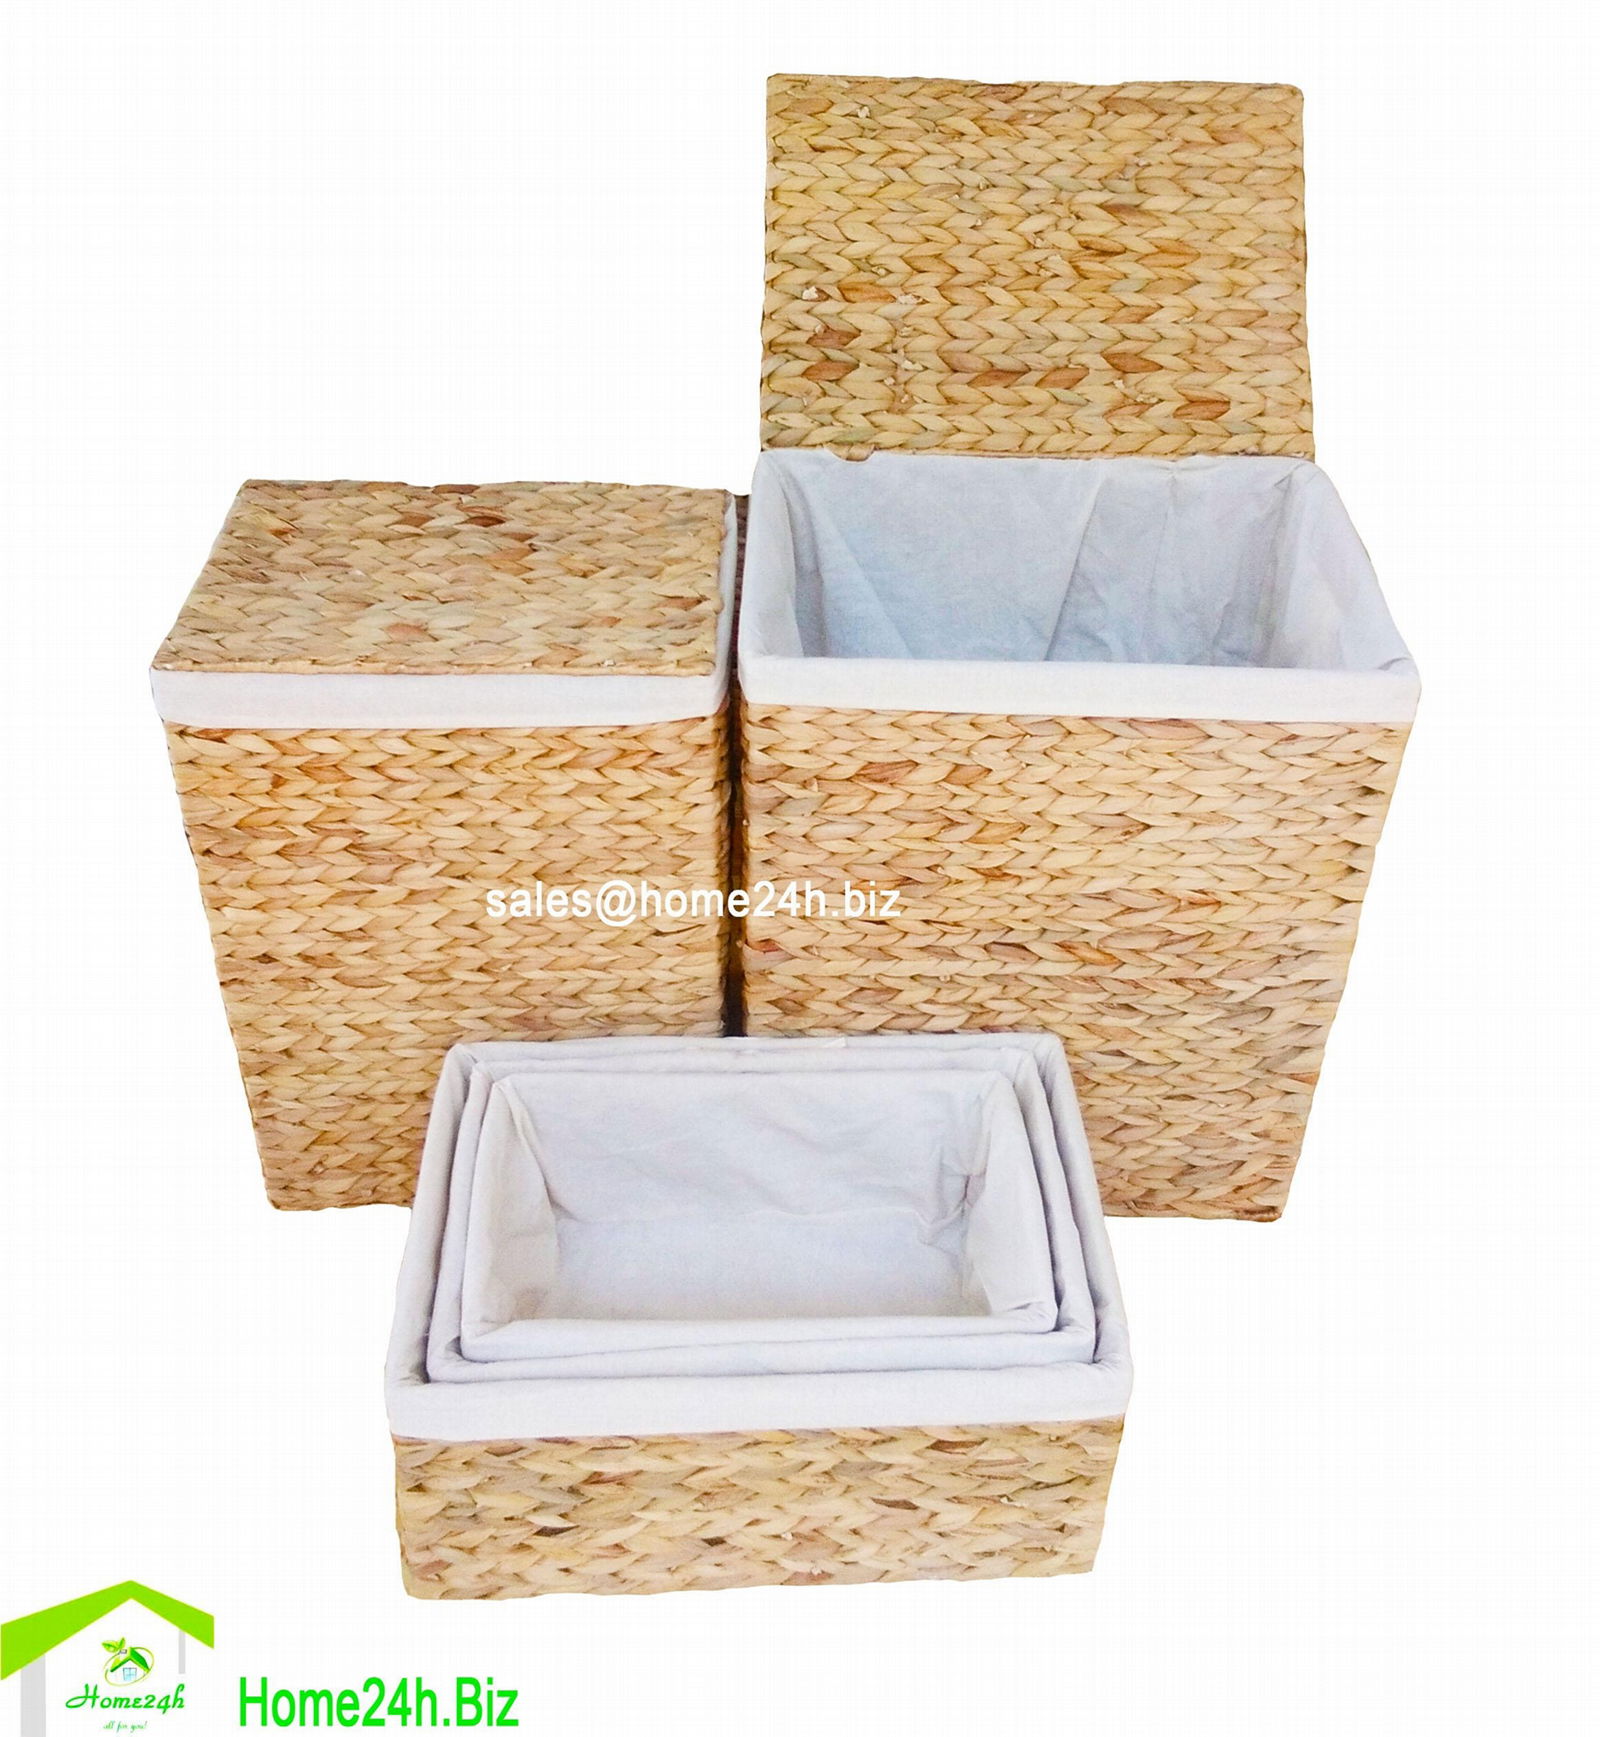 Home24h - Water hyacinth laundry hamper Basket Set s/5 4